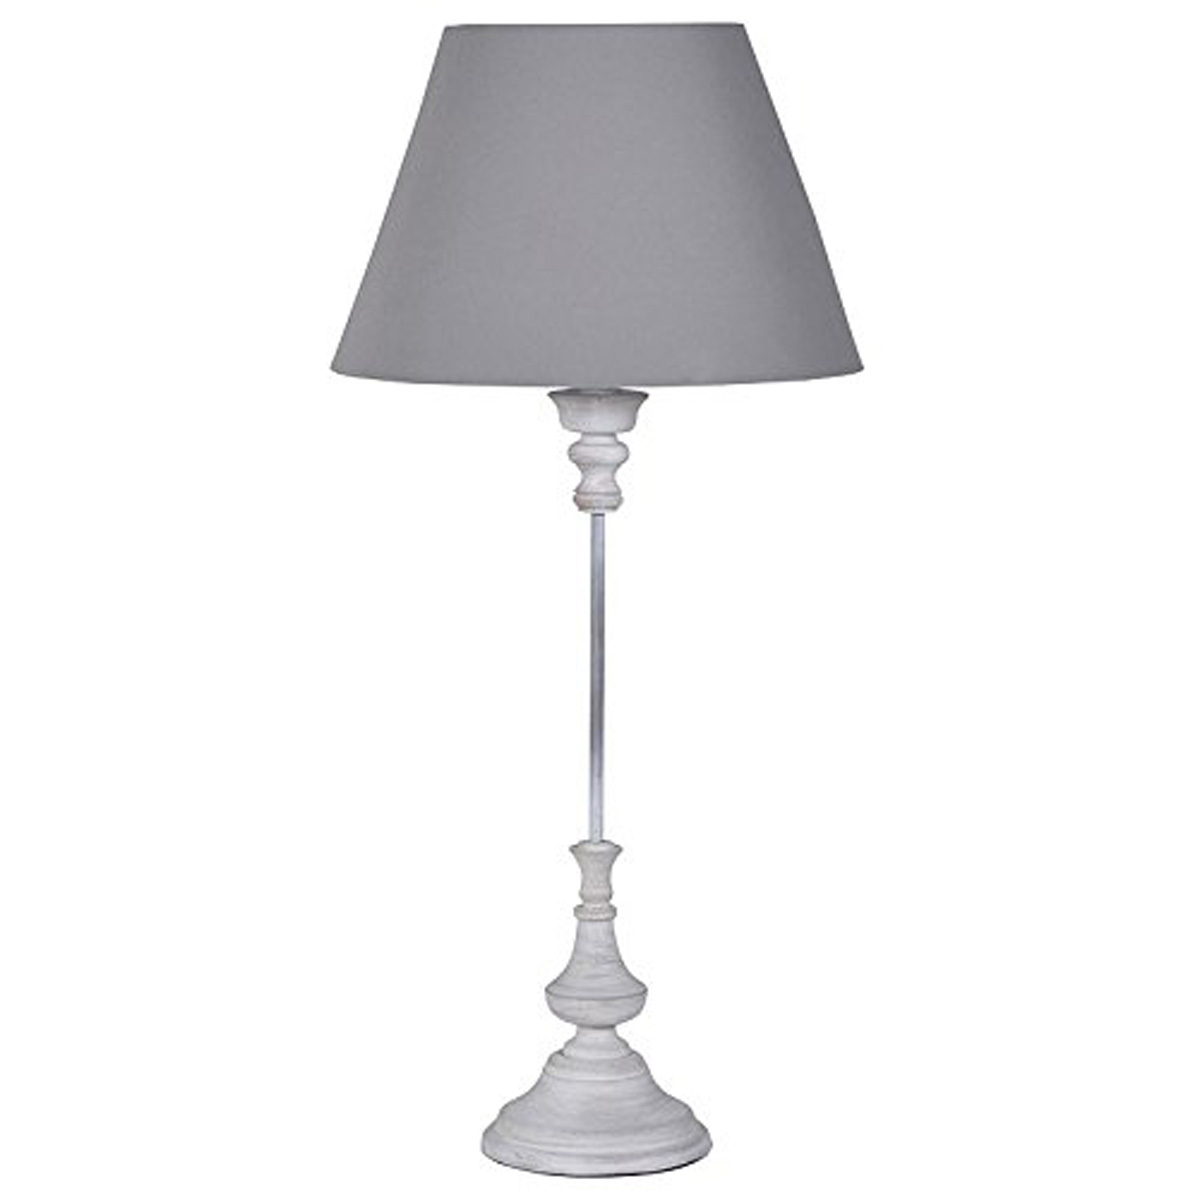 Tall Elegant Grey Table Lamp Interior, Tall Table Lamp With Grey Shade